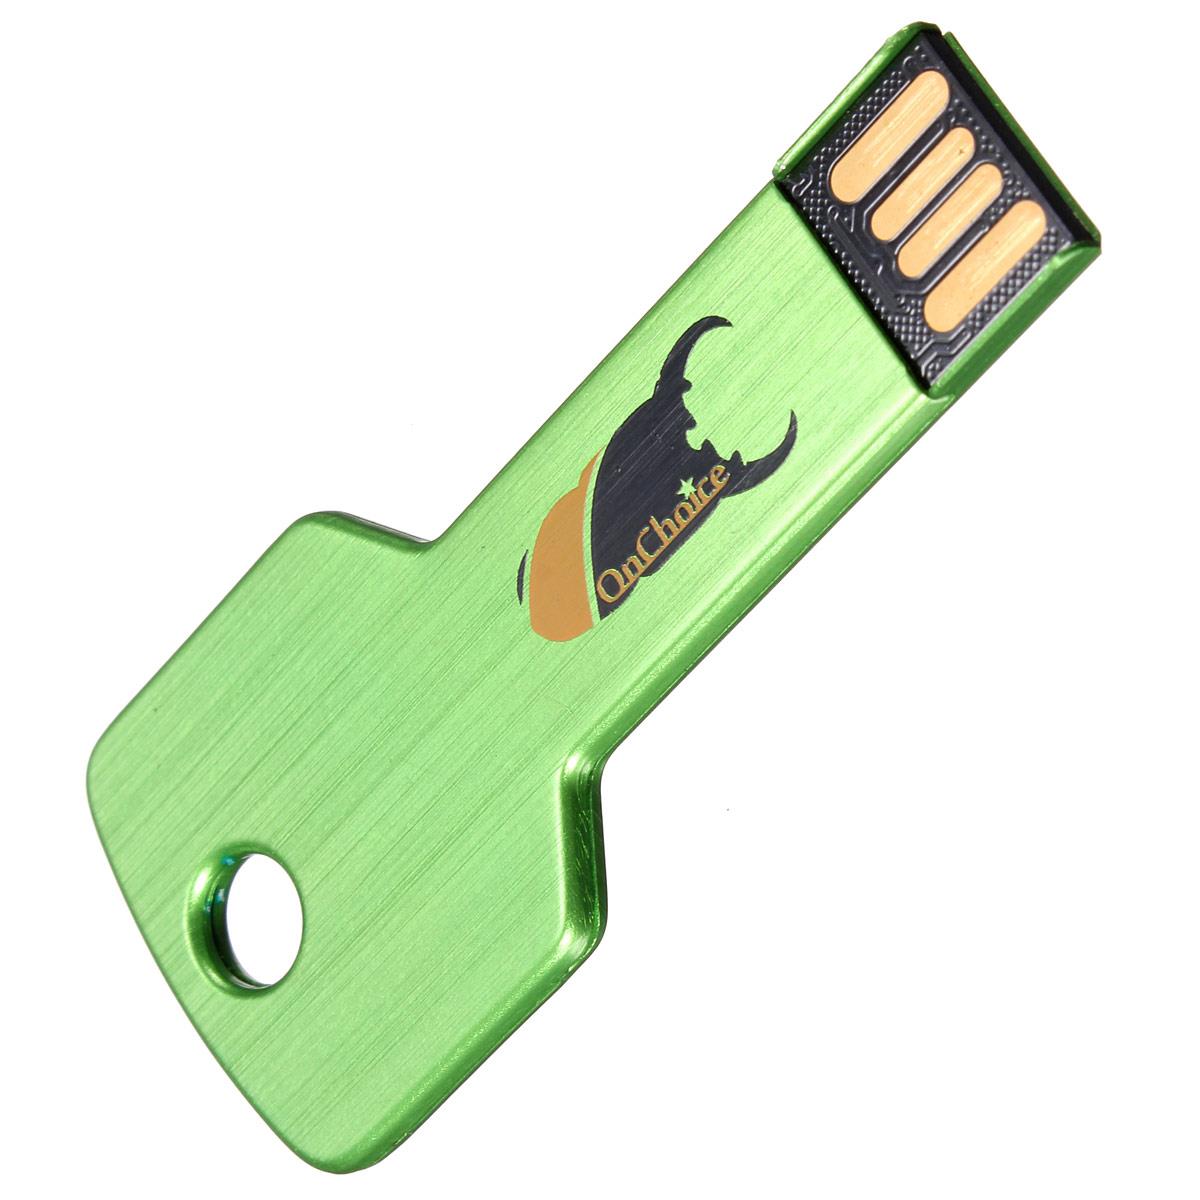 0nchoice 8GB USB 2.0 Waterproof Metal Key Flash Memory Stick Pen Drive Storage